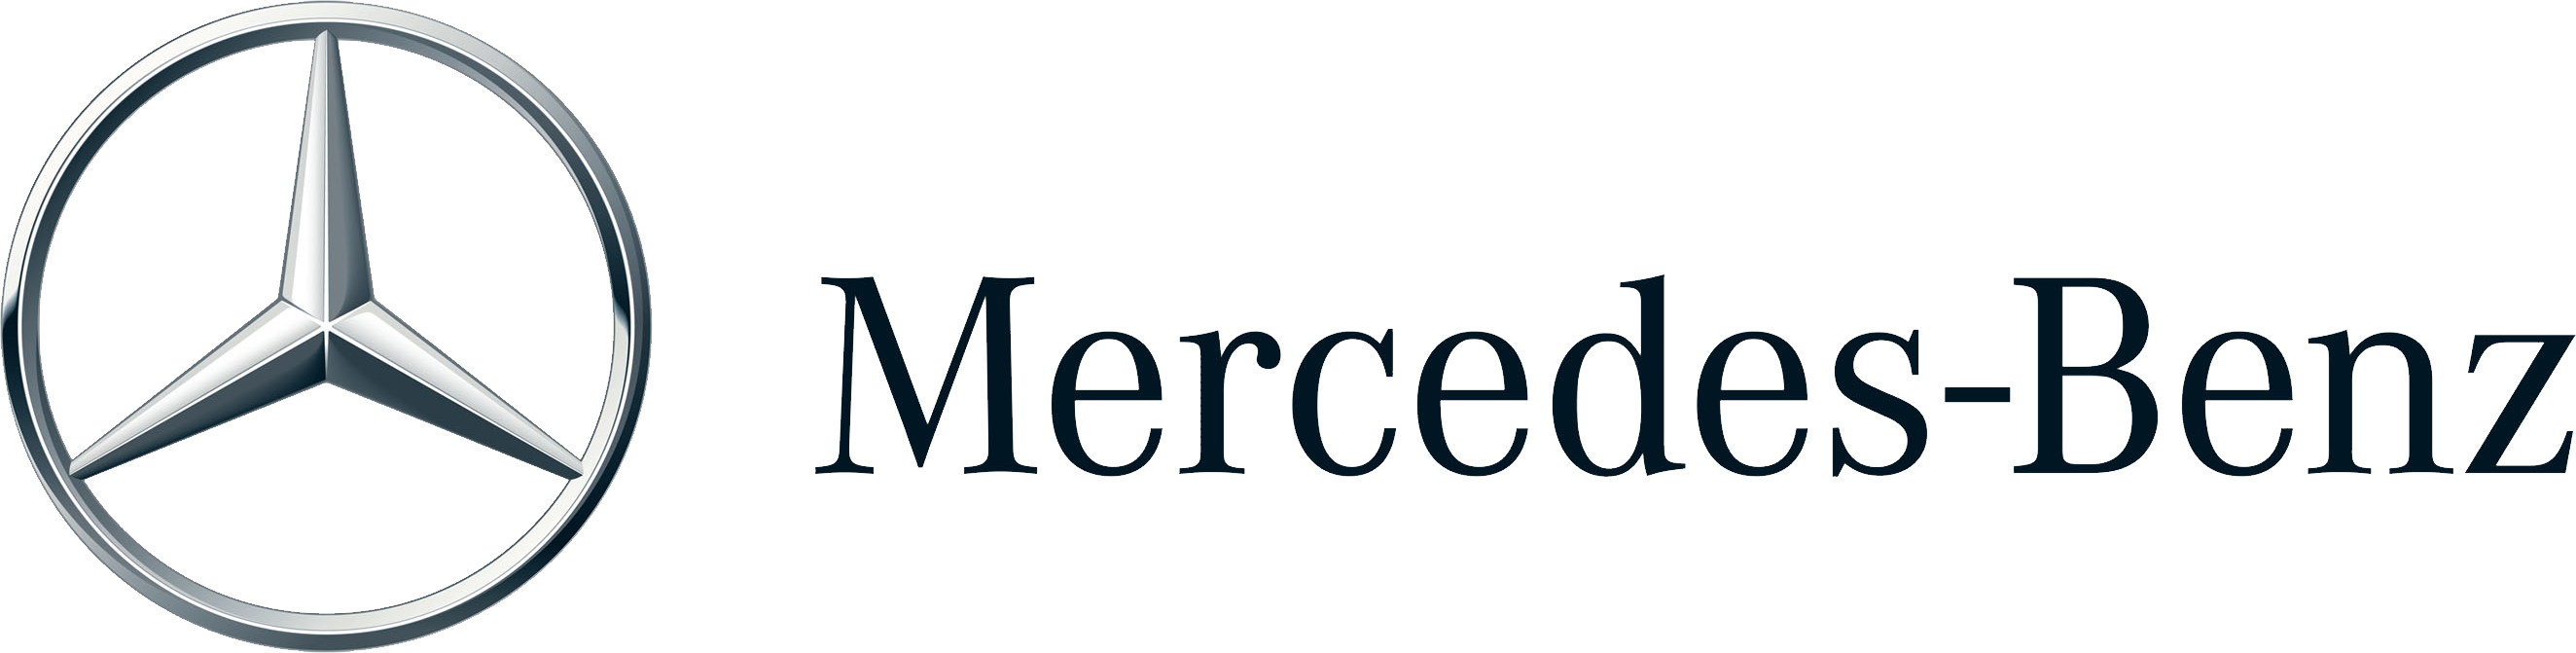 Mercedes-Benz Logo Transparent Image